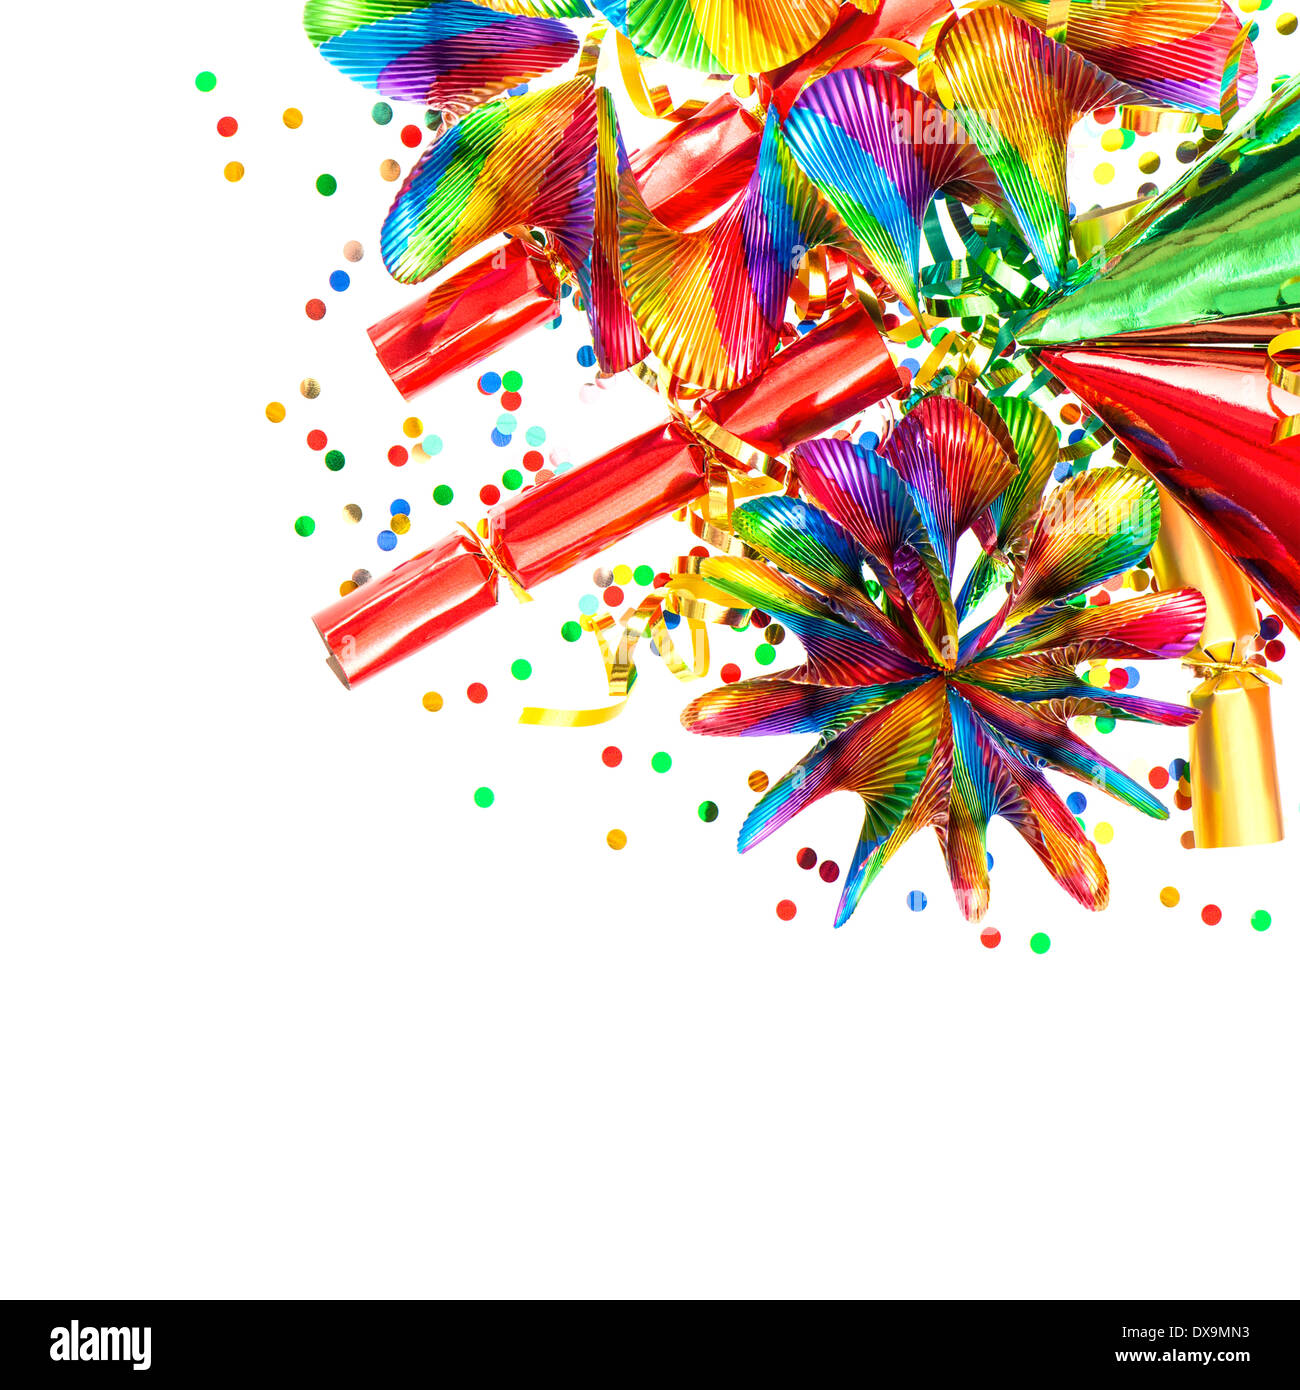 confetti, garlands, streamer. festive decorations background. carnival items Stock Photo